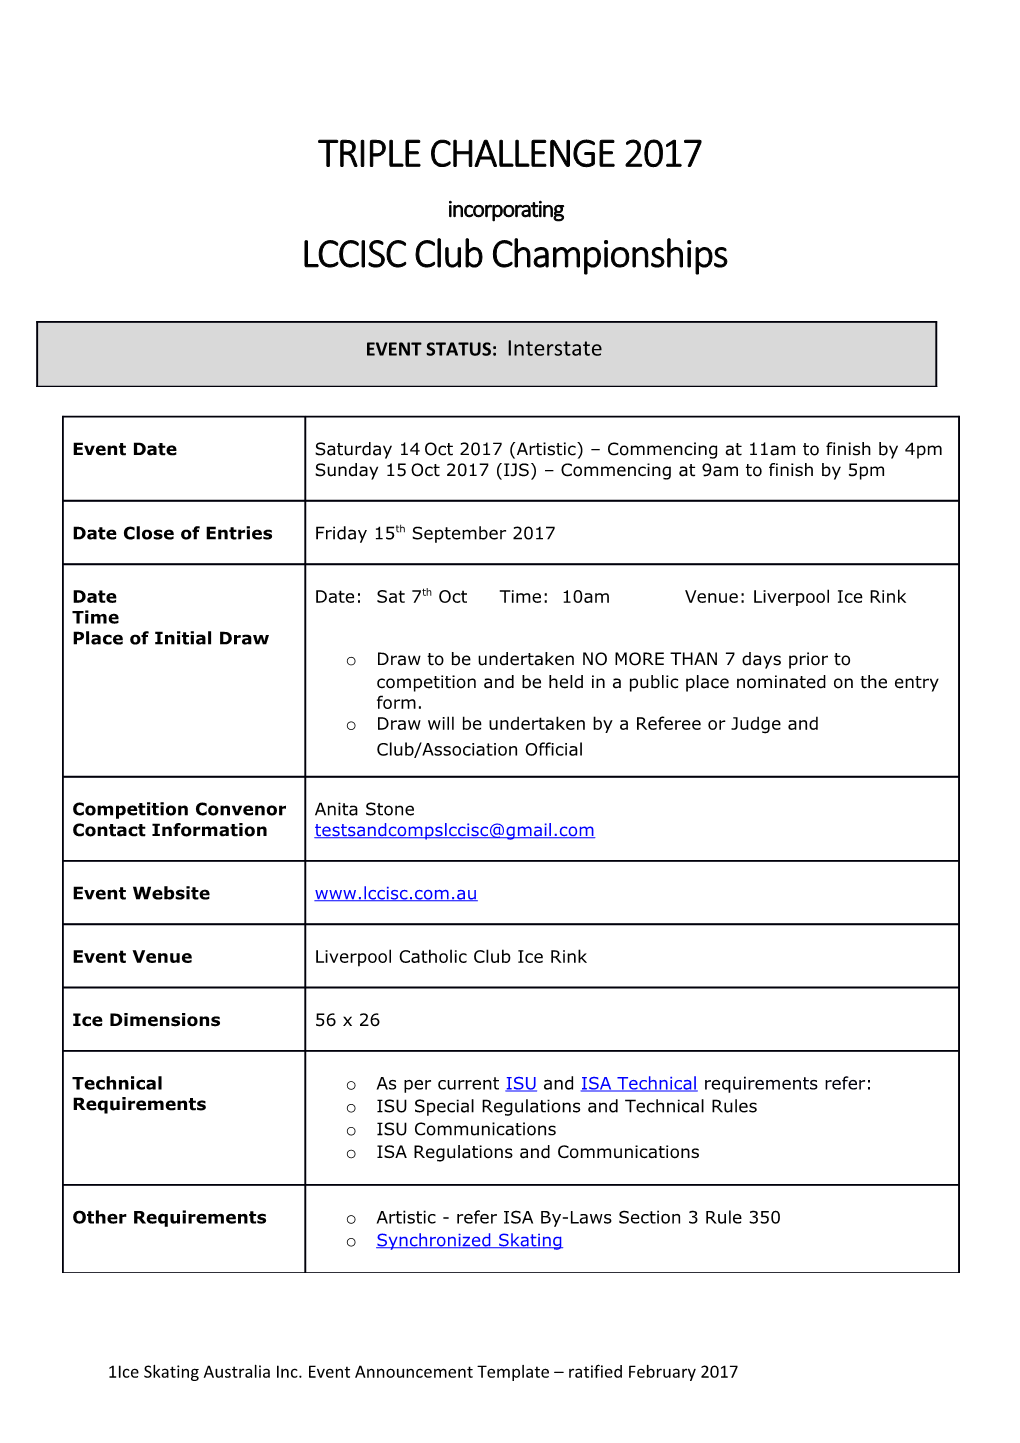 LCCISC Club Championships